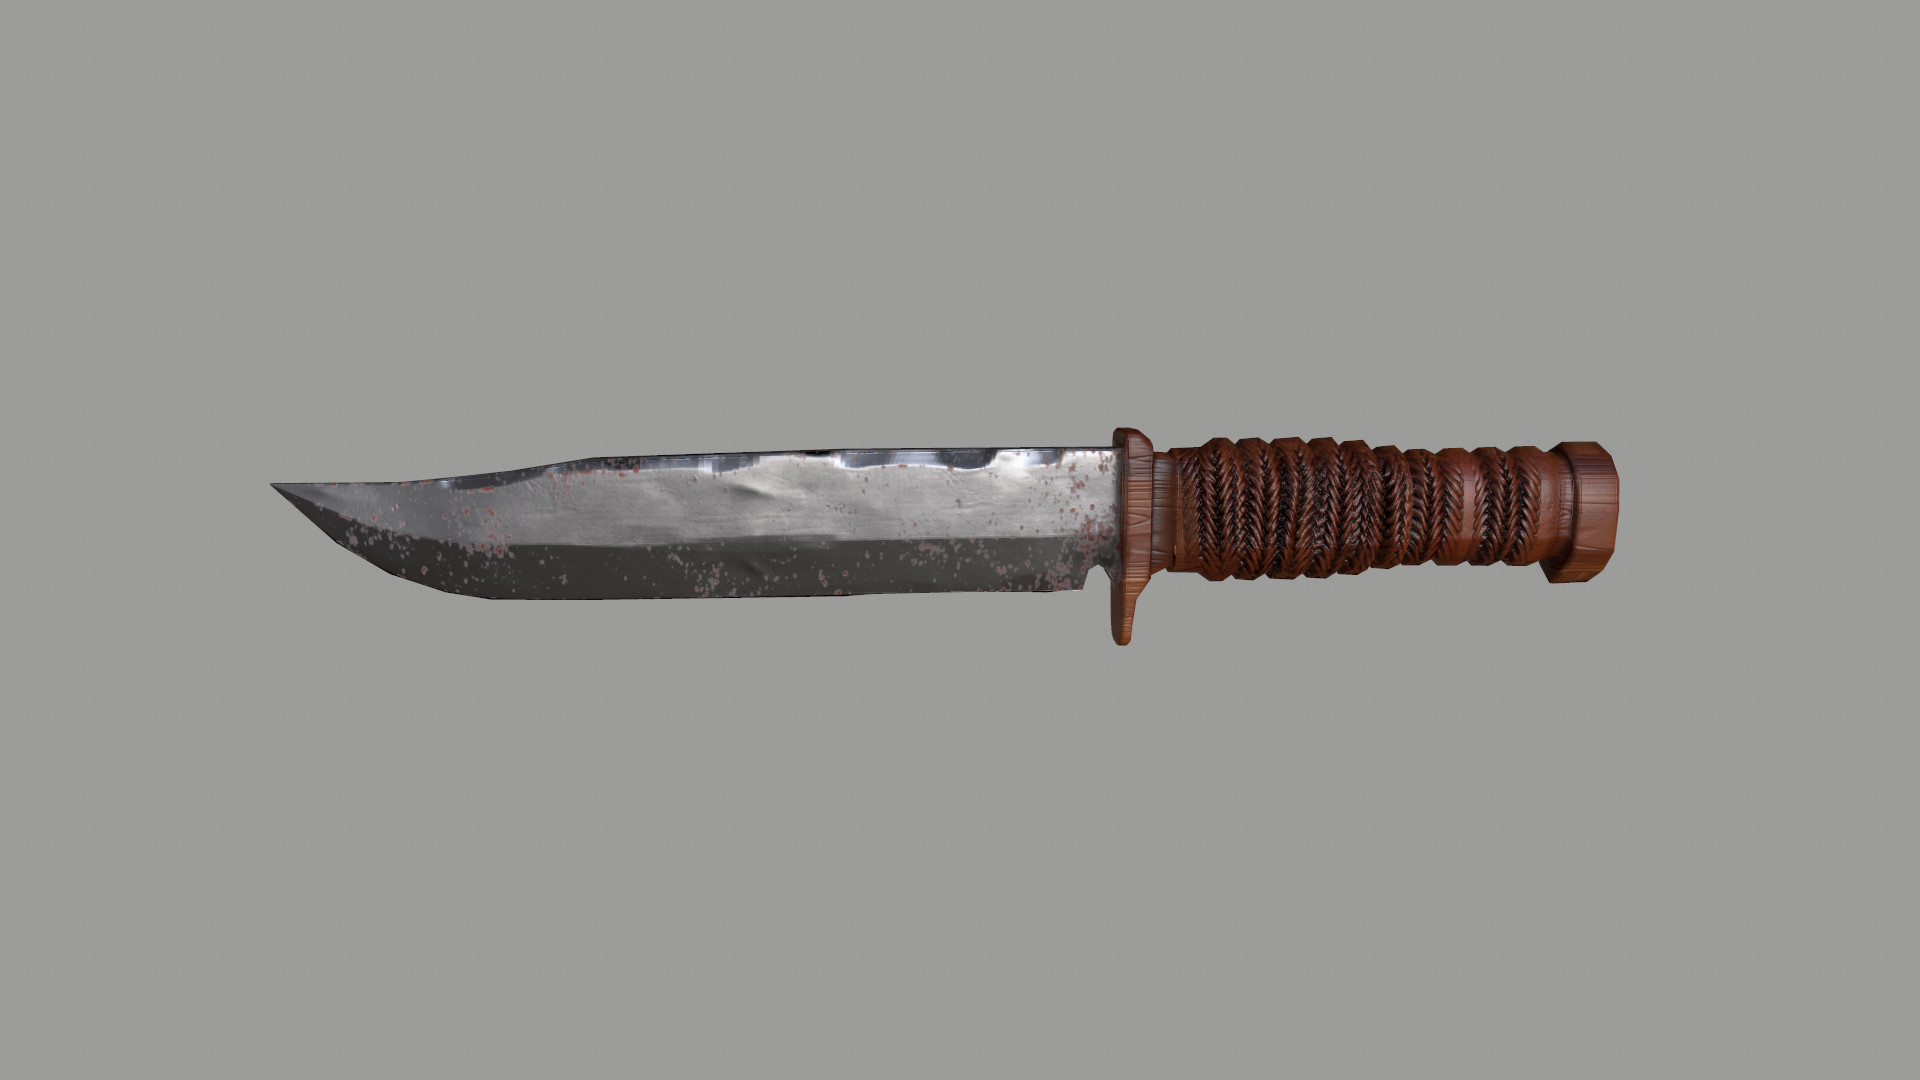 Muhammed shamil - Crafting Knife